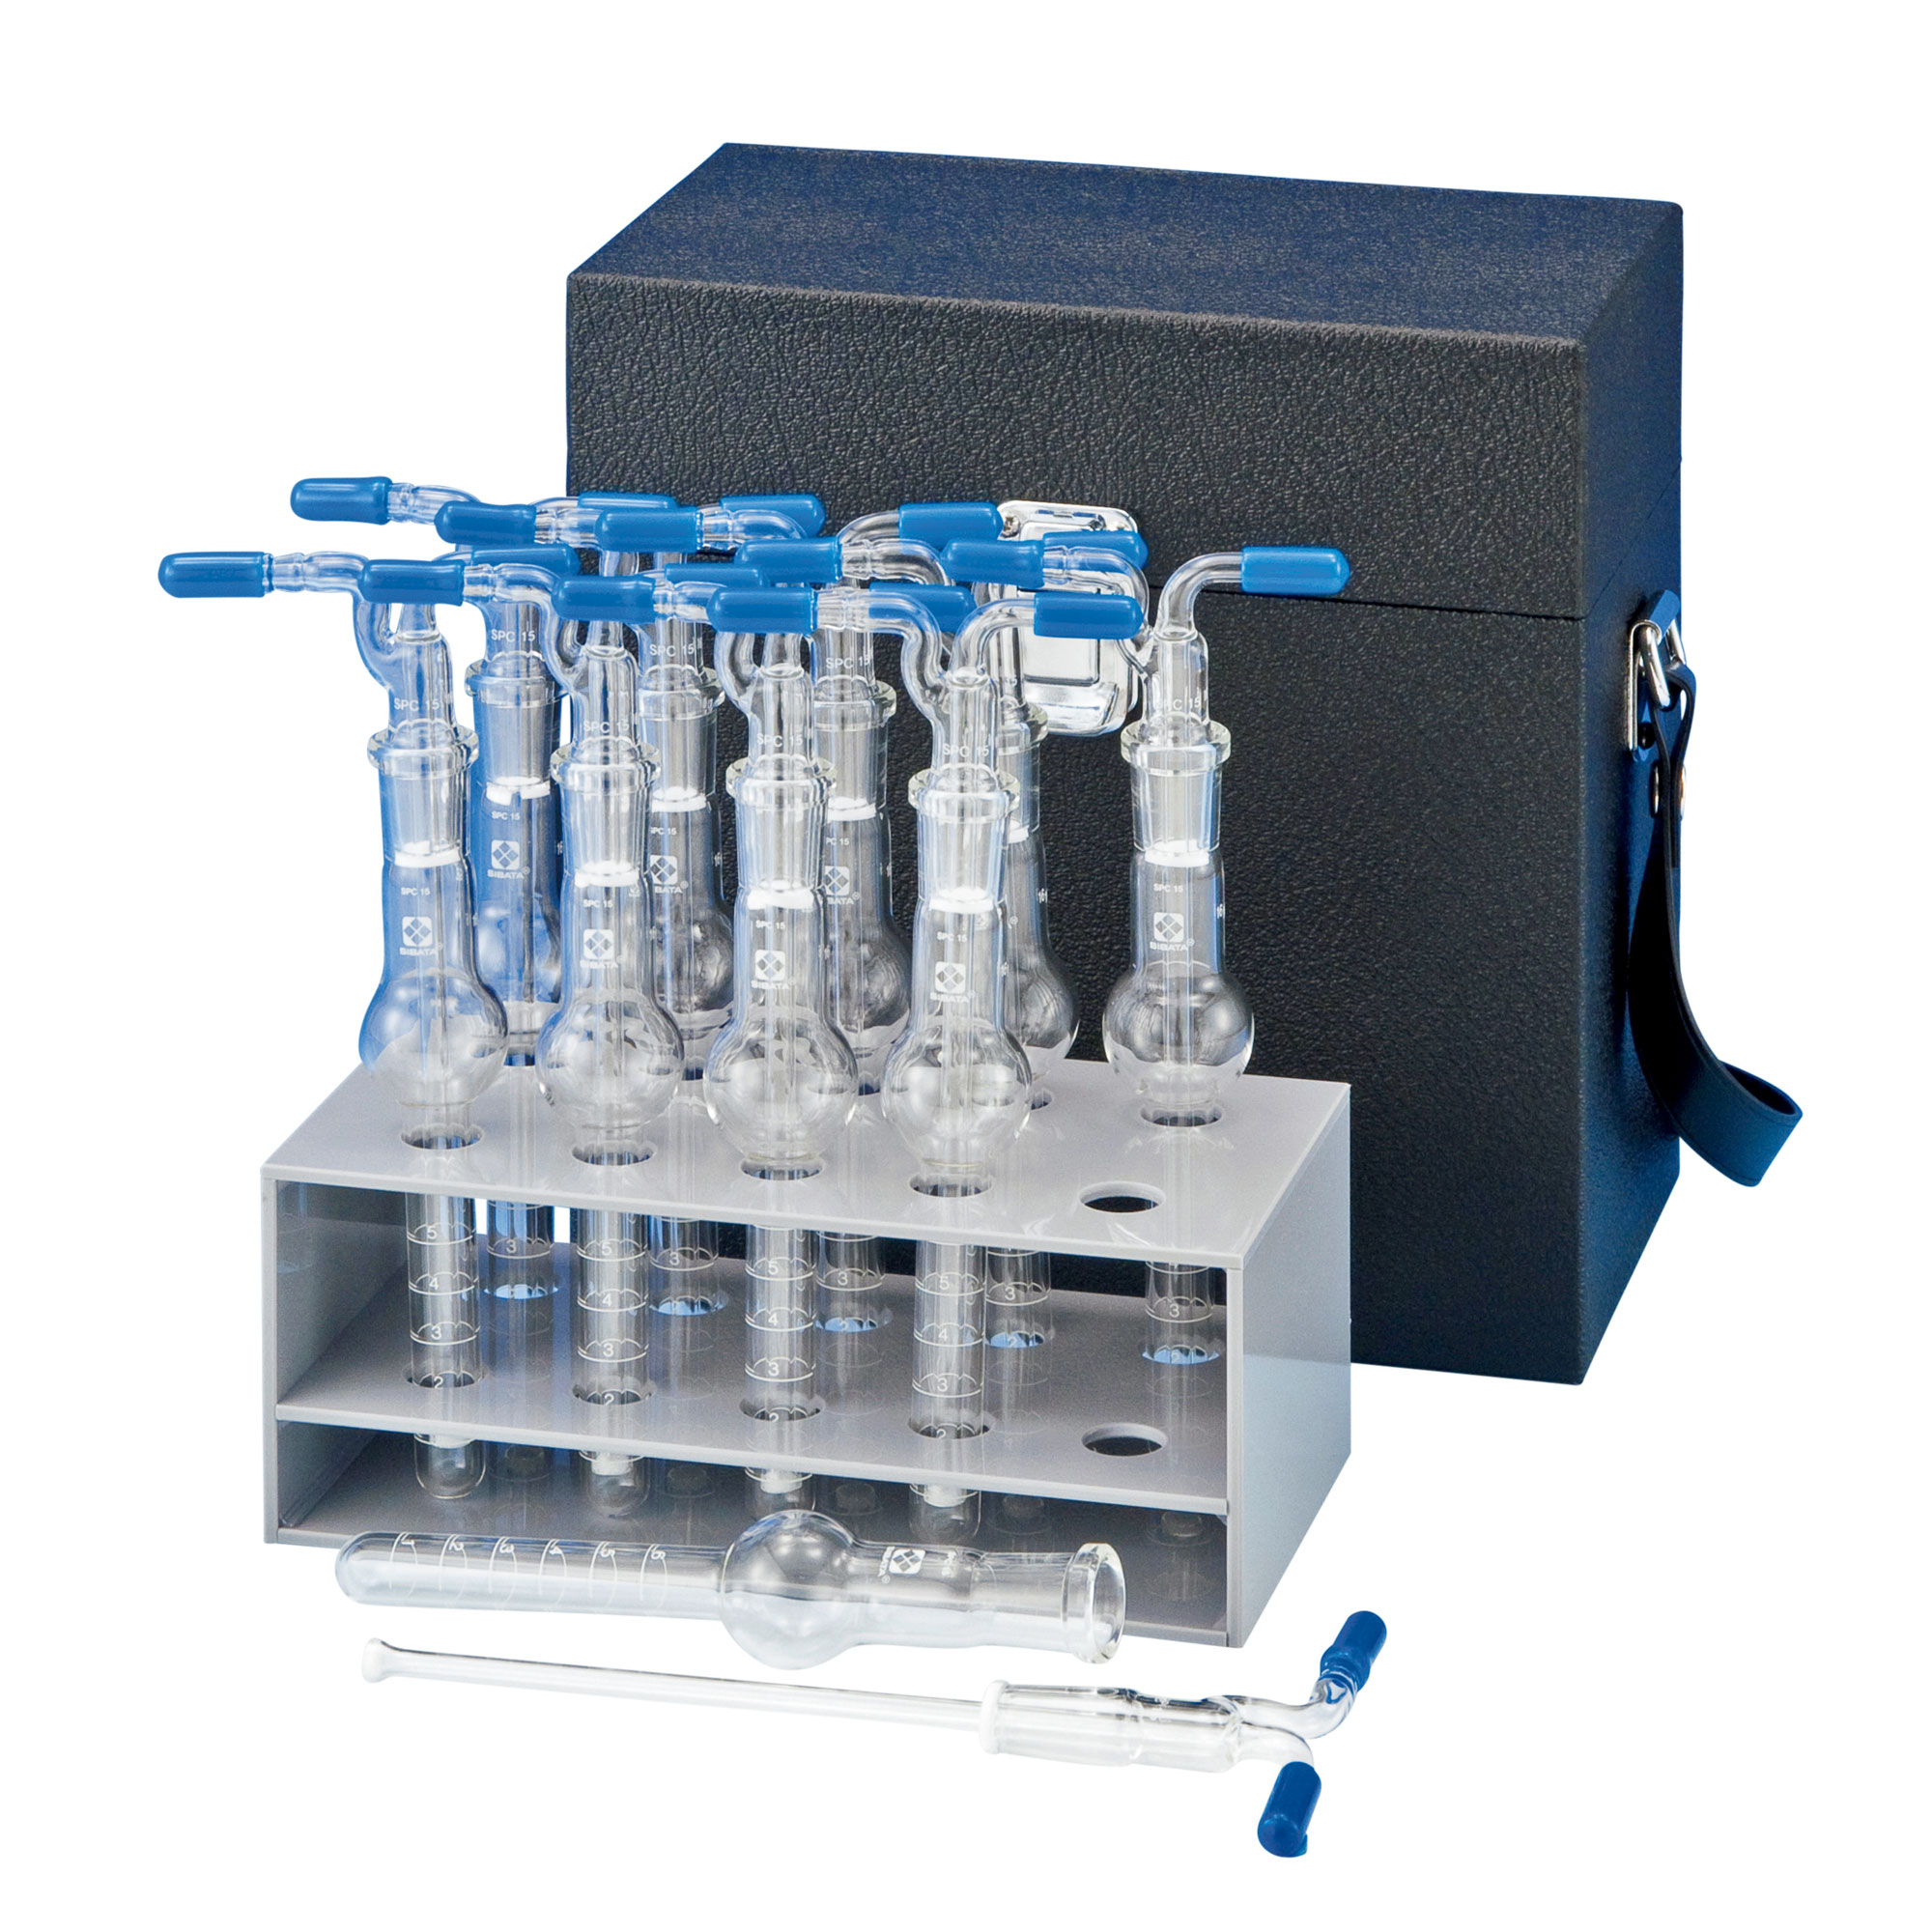 080100-1 液体捕集器具 小型バフラー Set 柴田科学(SIBATA) 印刷